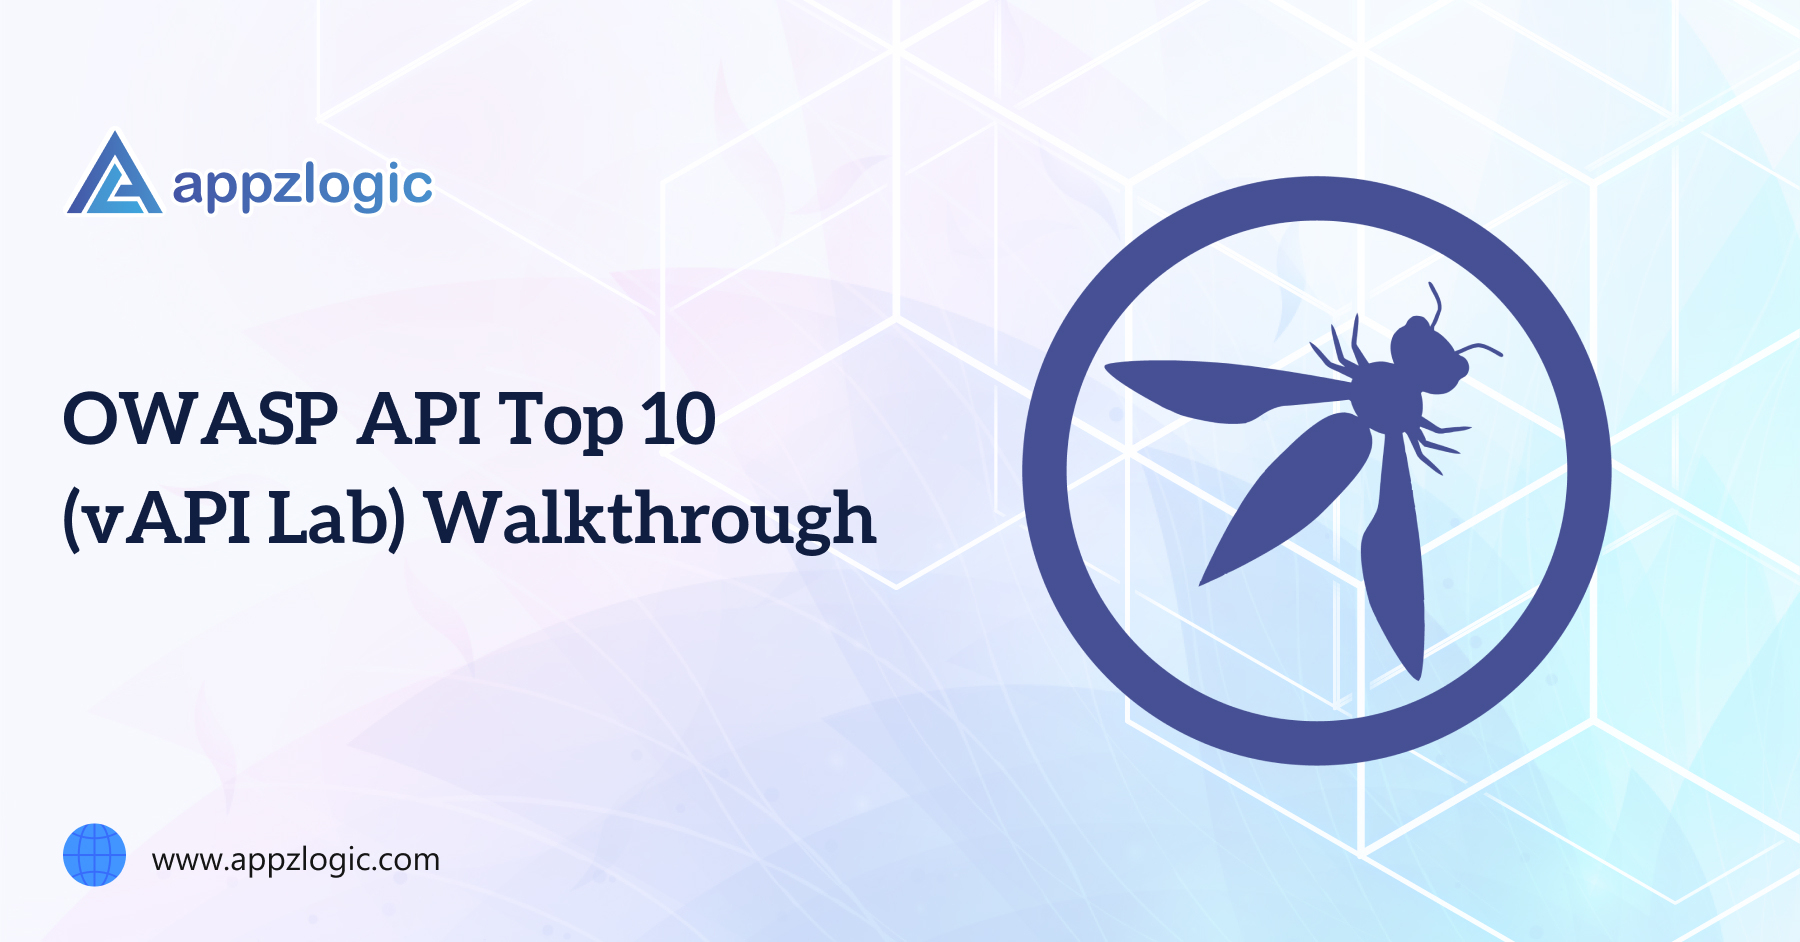 OWASPAPI Top 10 (vAPI Lab) Walkthrough